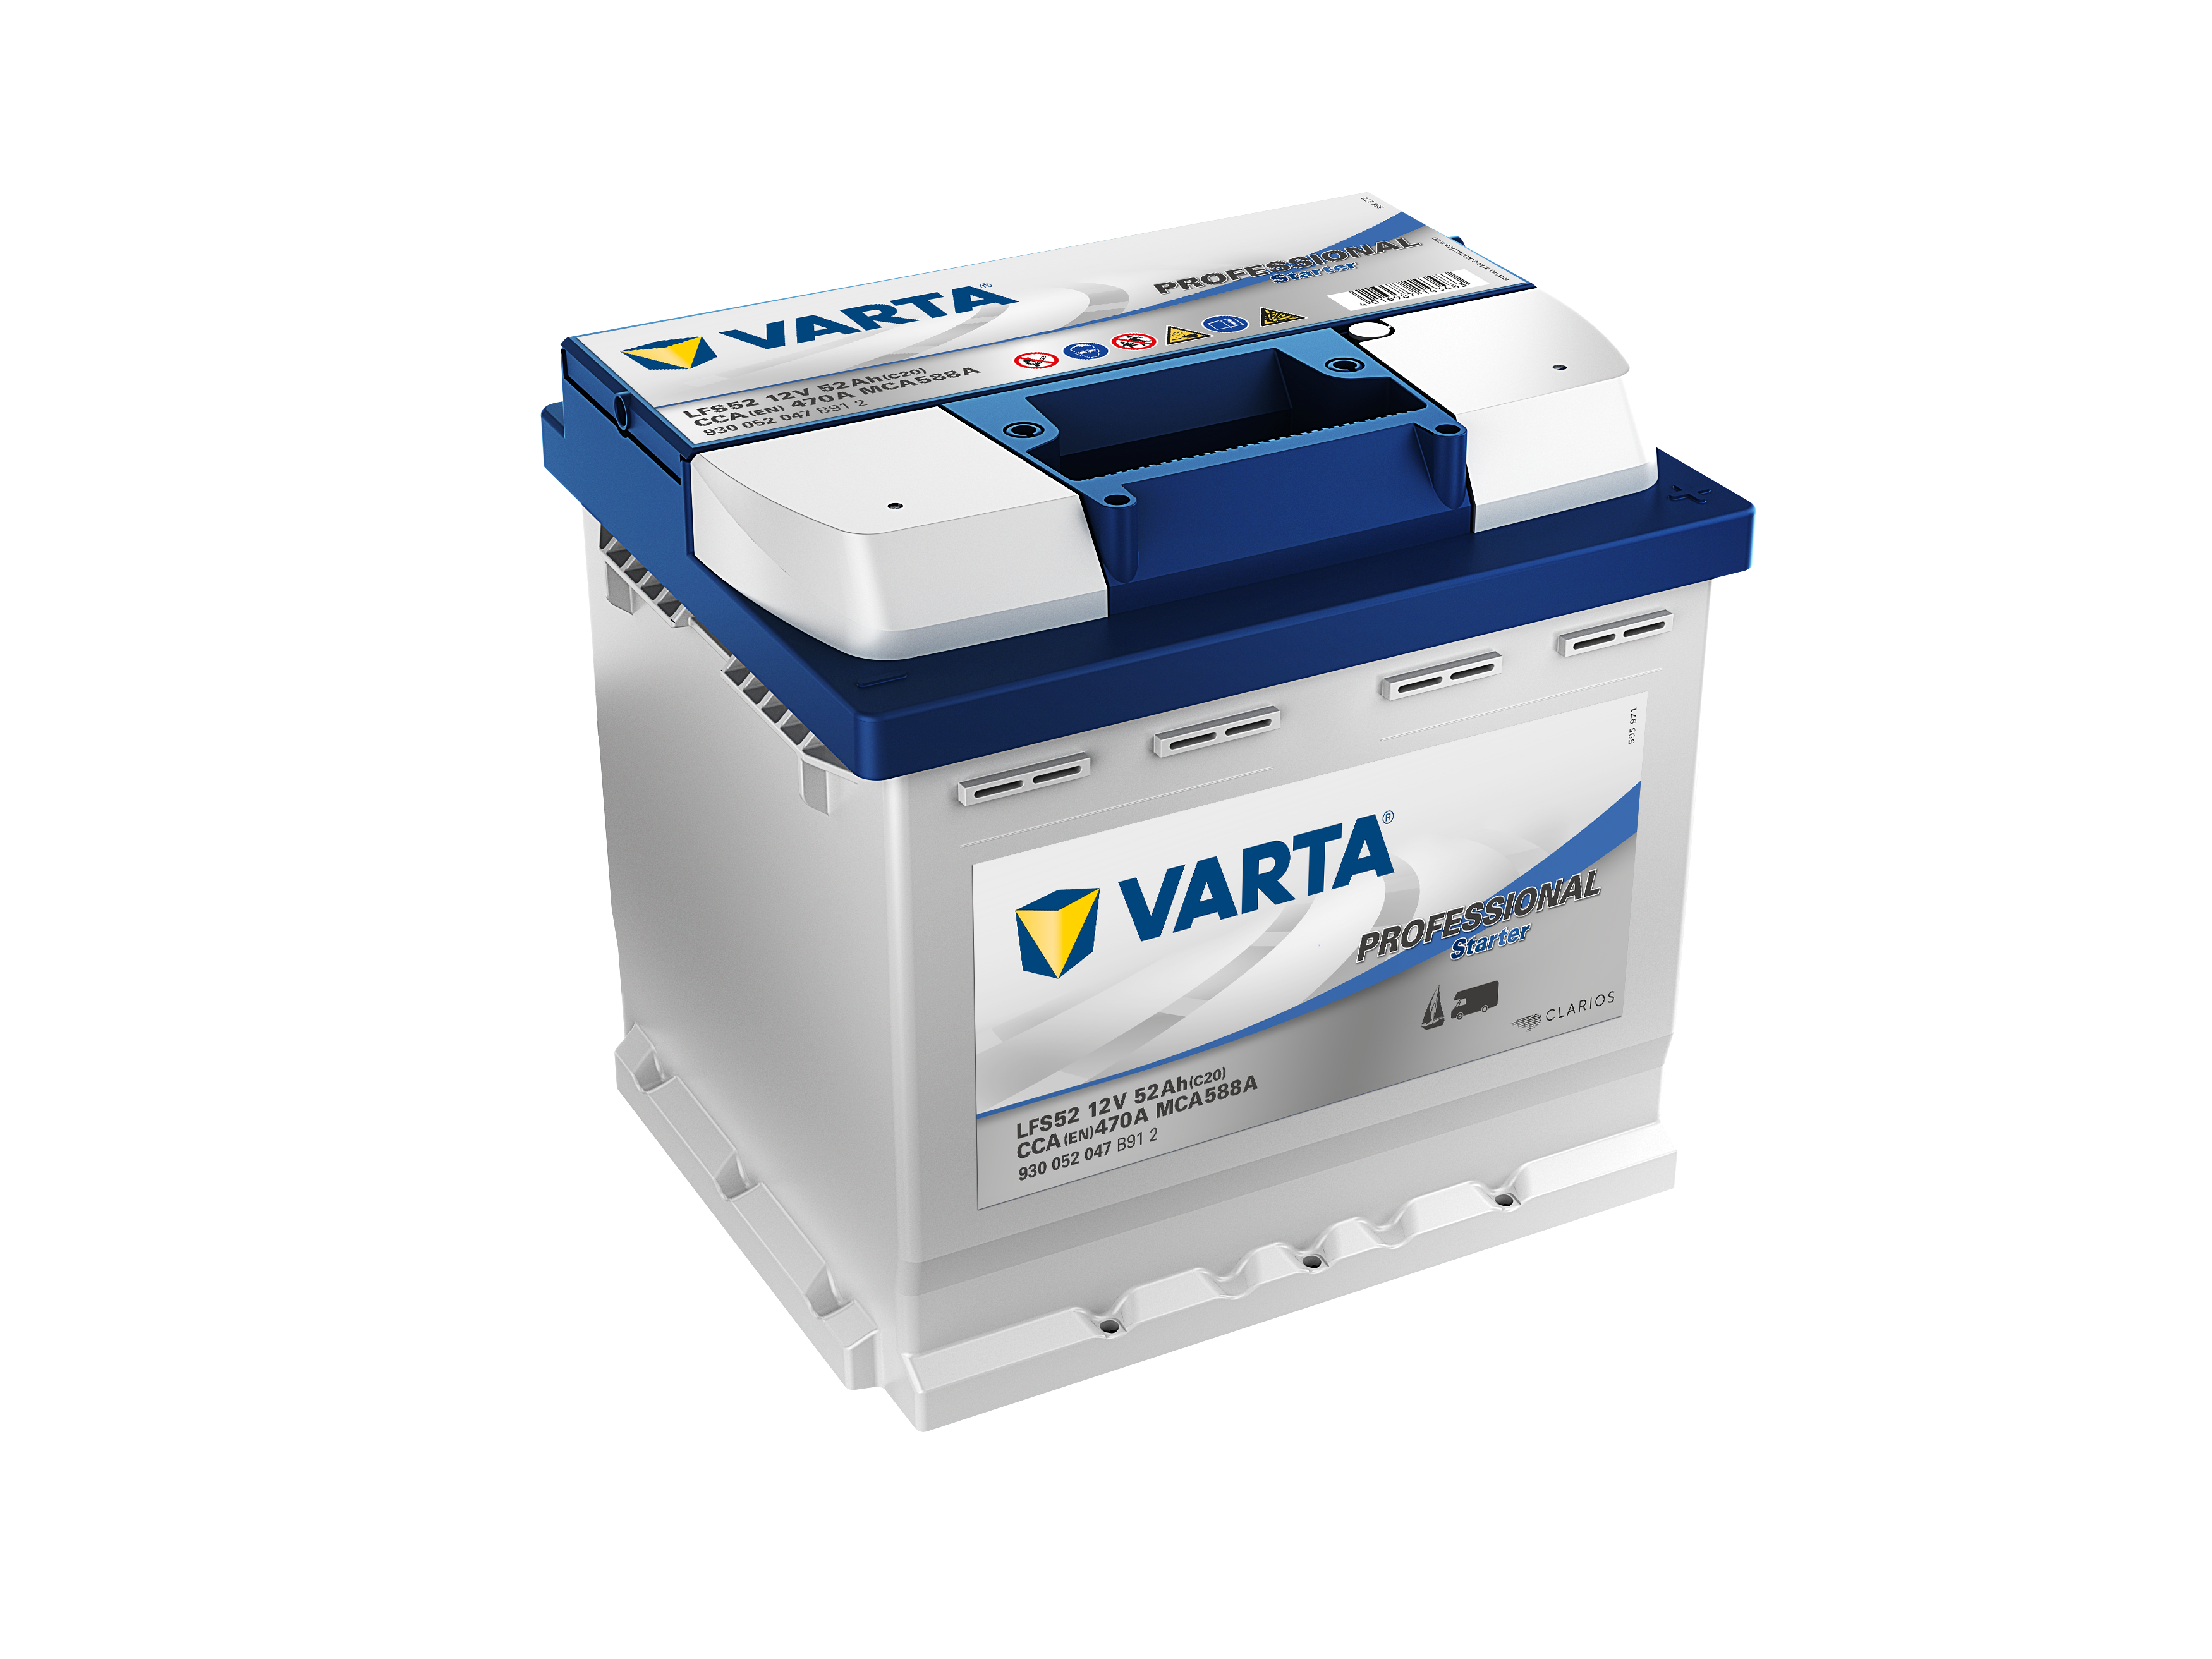 VARTA Professional Dual Purpose EFB - LED95 - 95 Ah, AGM Batterie 12V, Gel  Batterie, Elektrik für Wohnmobile, Batterien, Camping-Shop